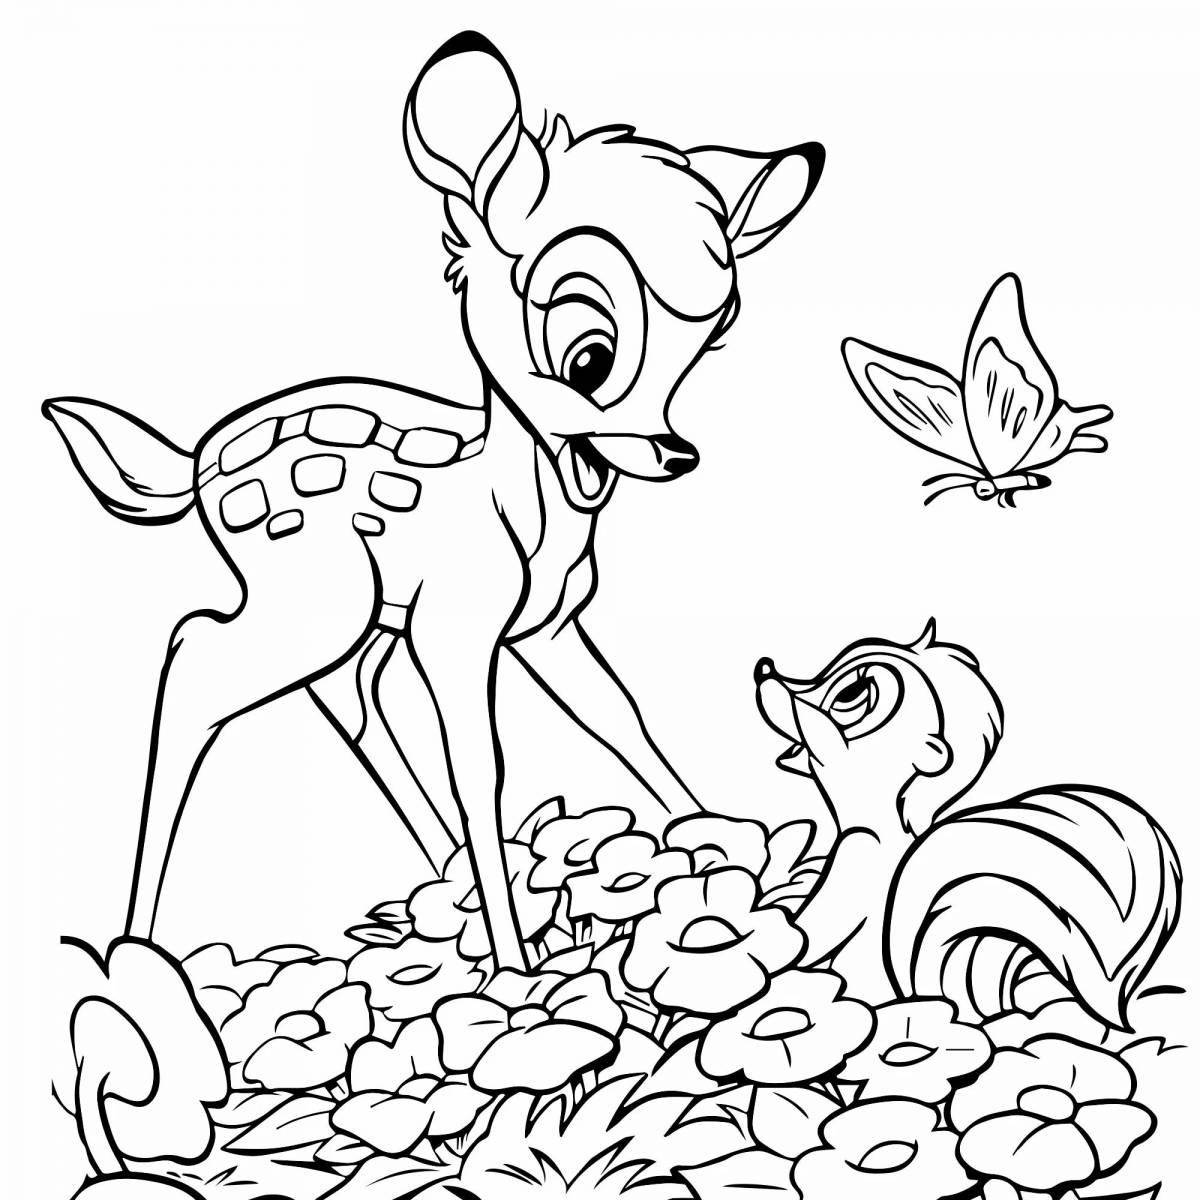 Joyful bambi coloring book for kids